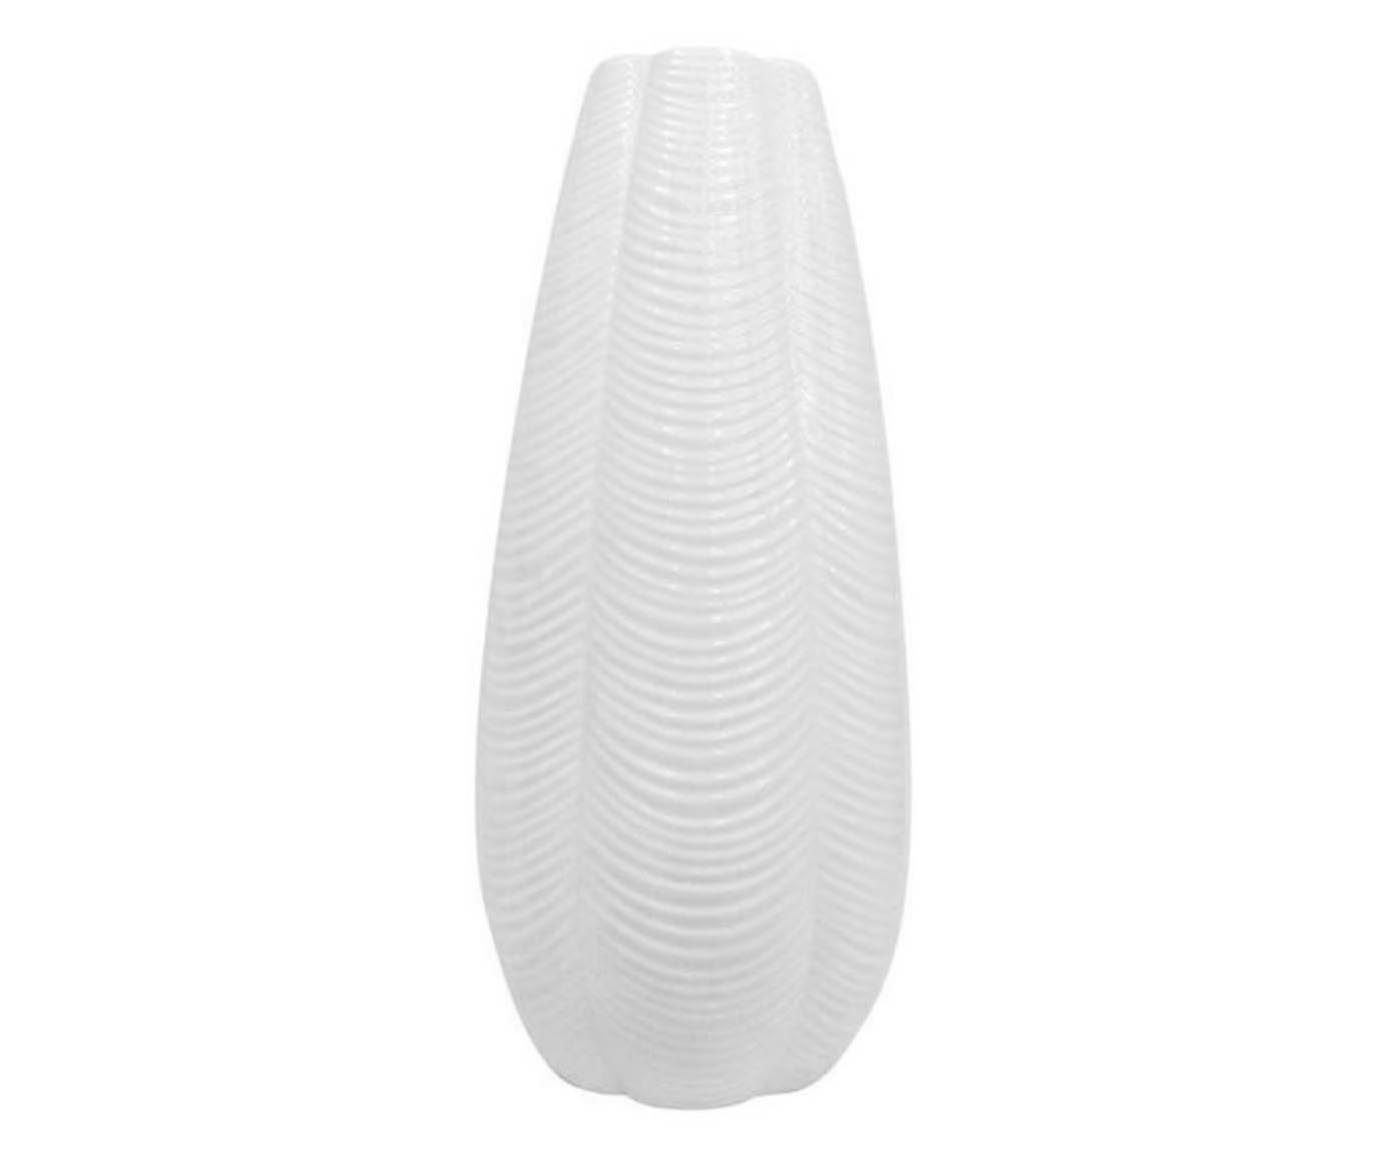 Vaso inspire - 40cm | Westwing.com.br